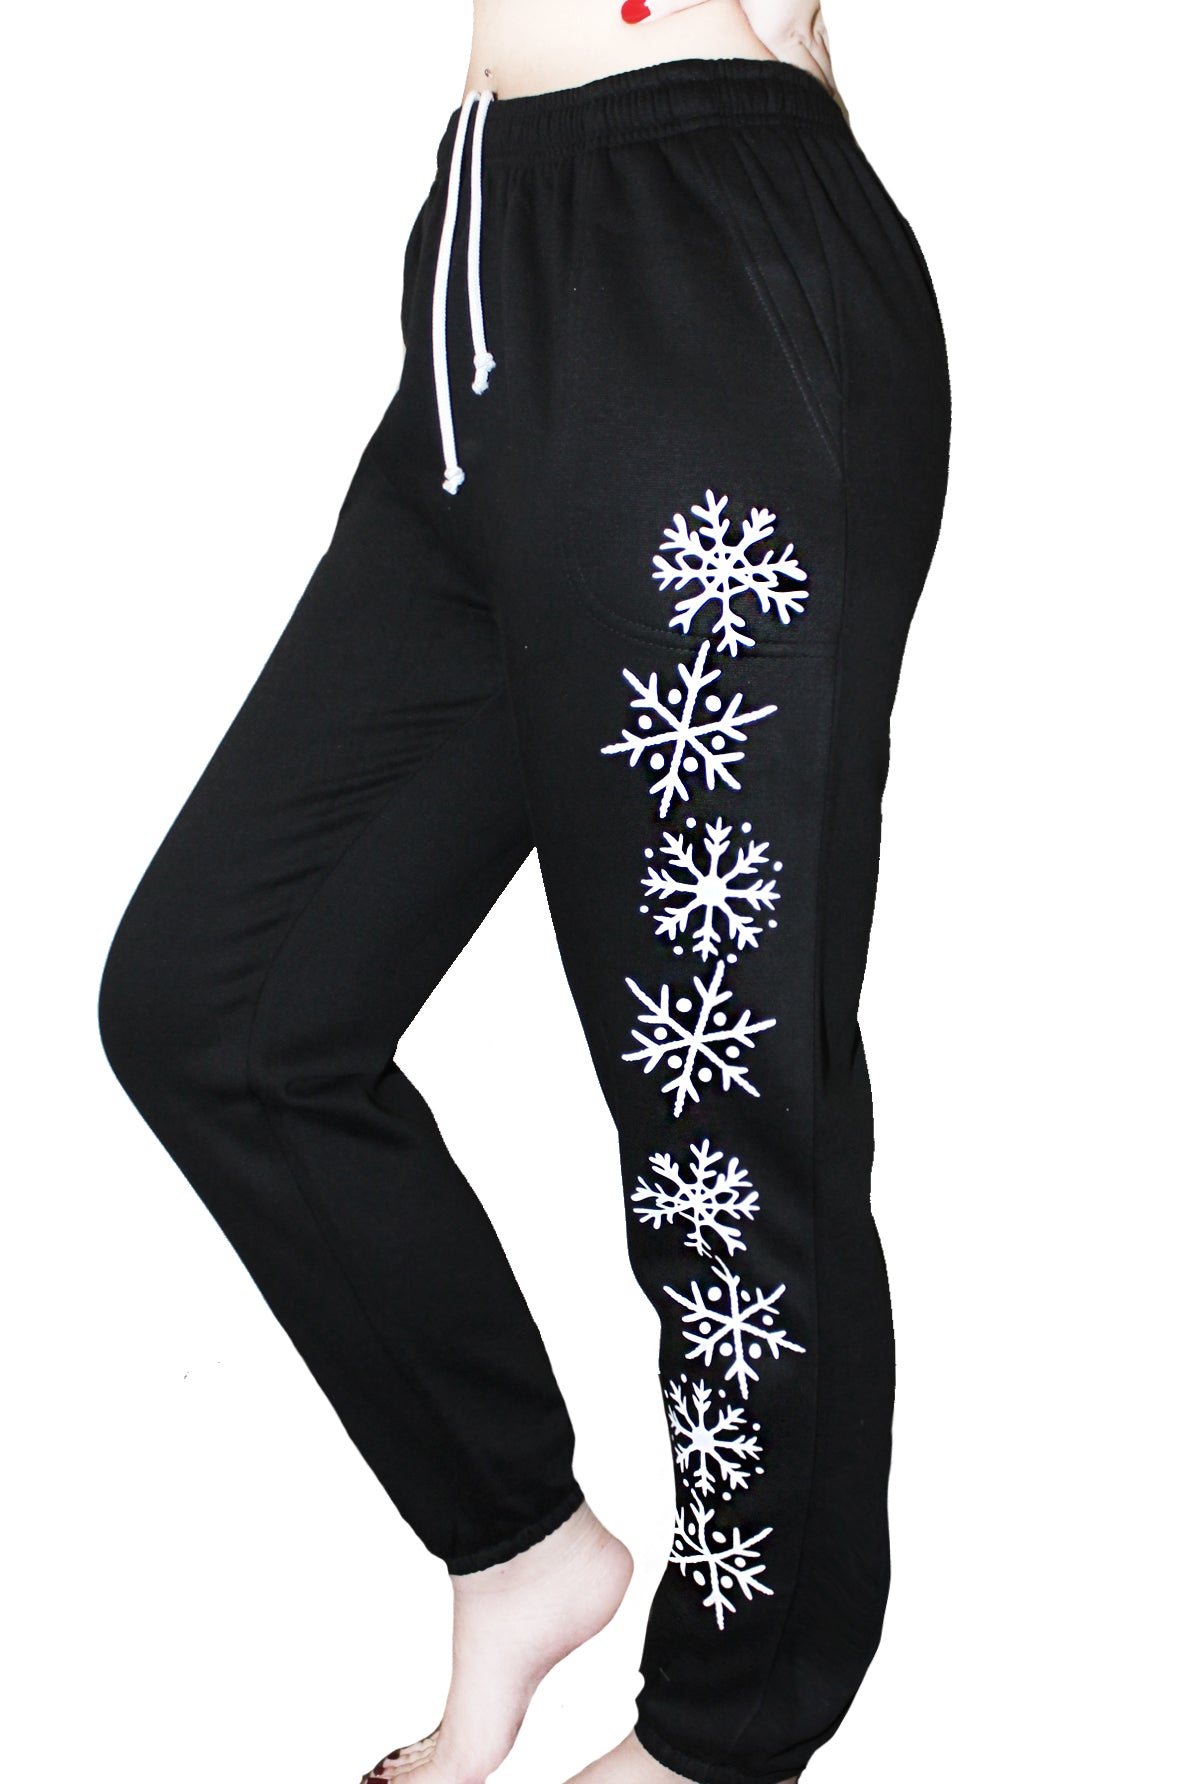 JOLYSINGWK Black Leggings Women Winter Thickened Plush Sweatpants